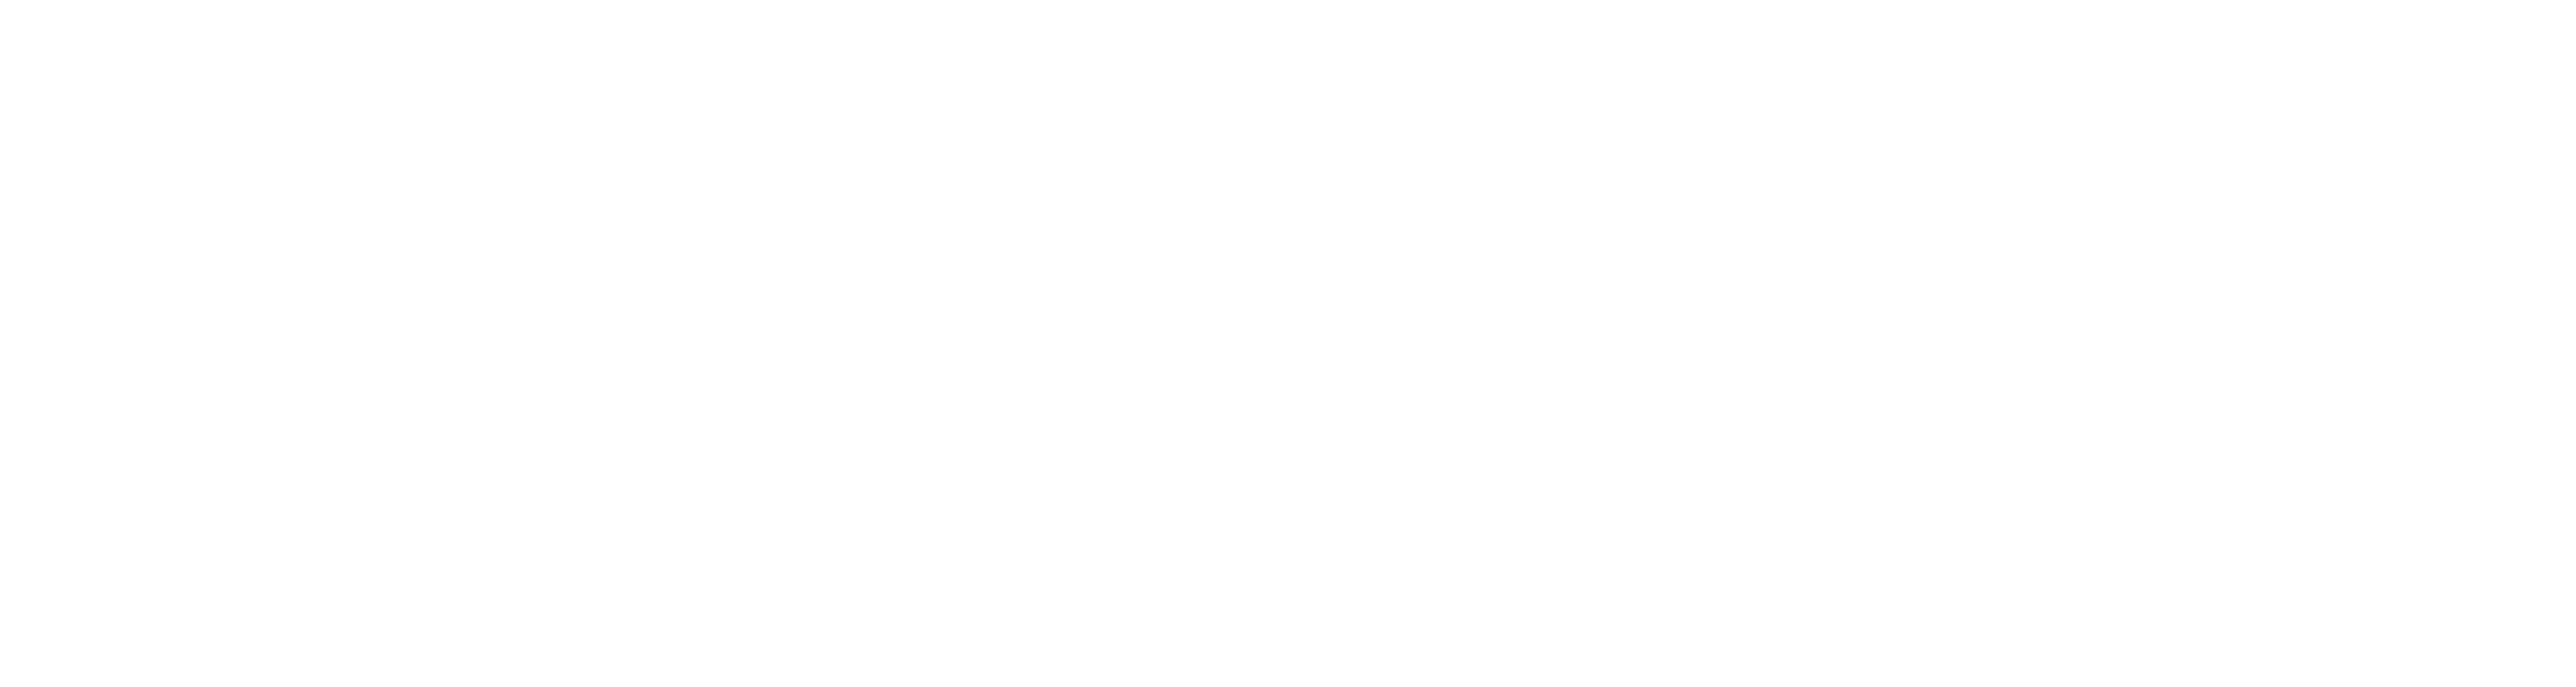 NLC Logo